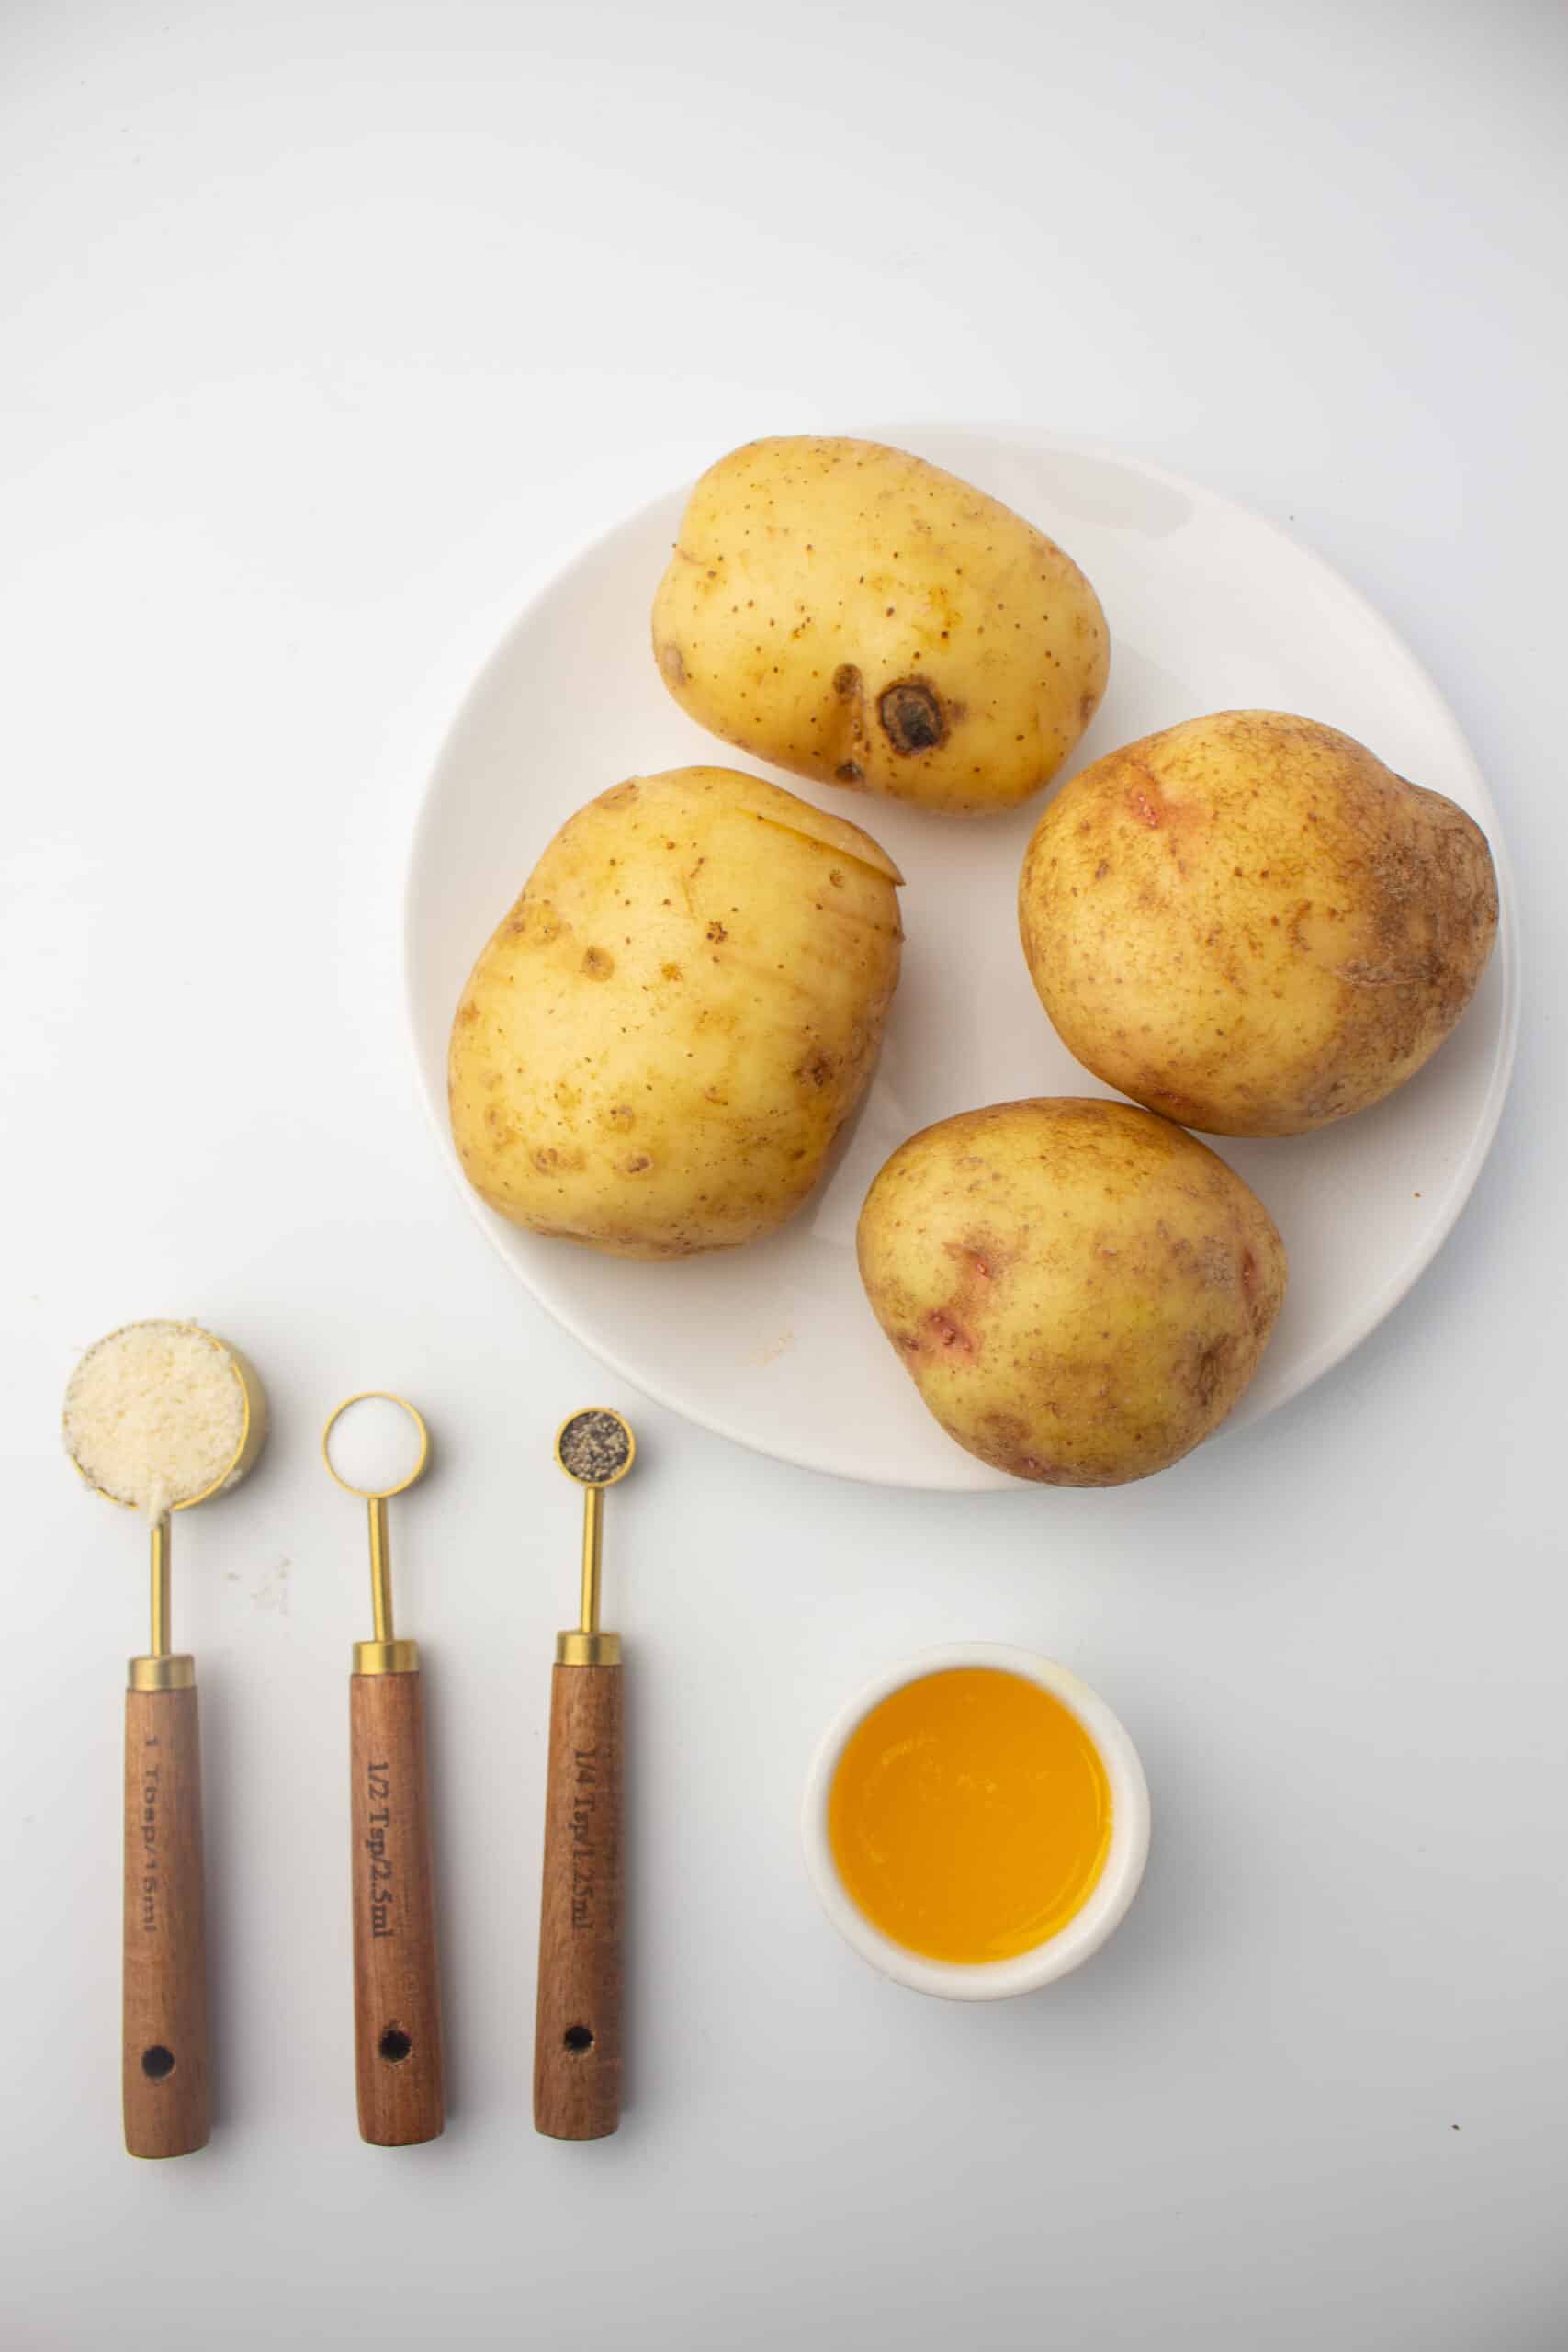 Ingredients for Air Fryer Hassleback Potatoes